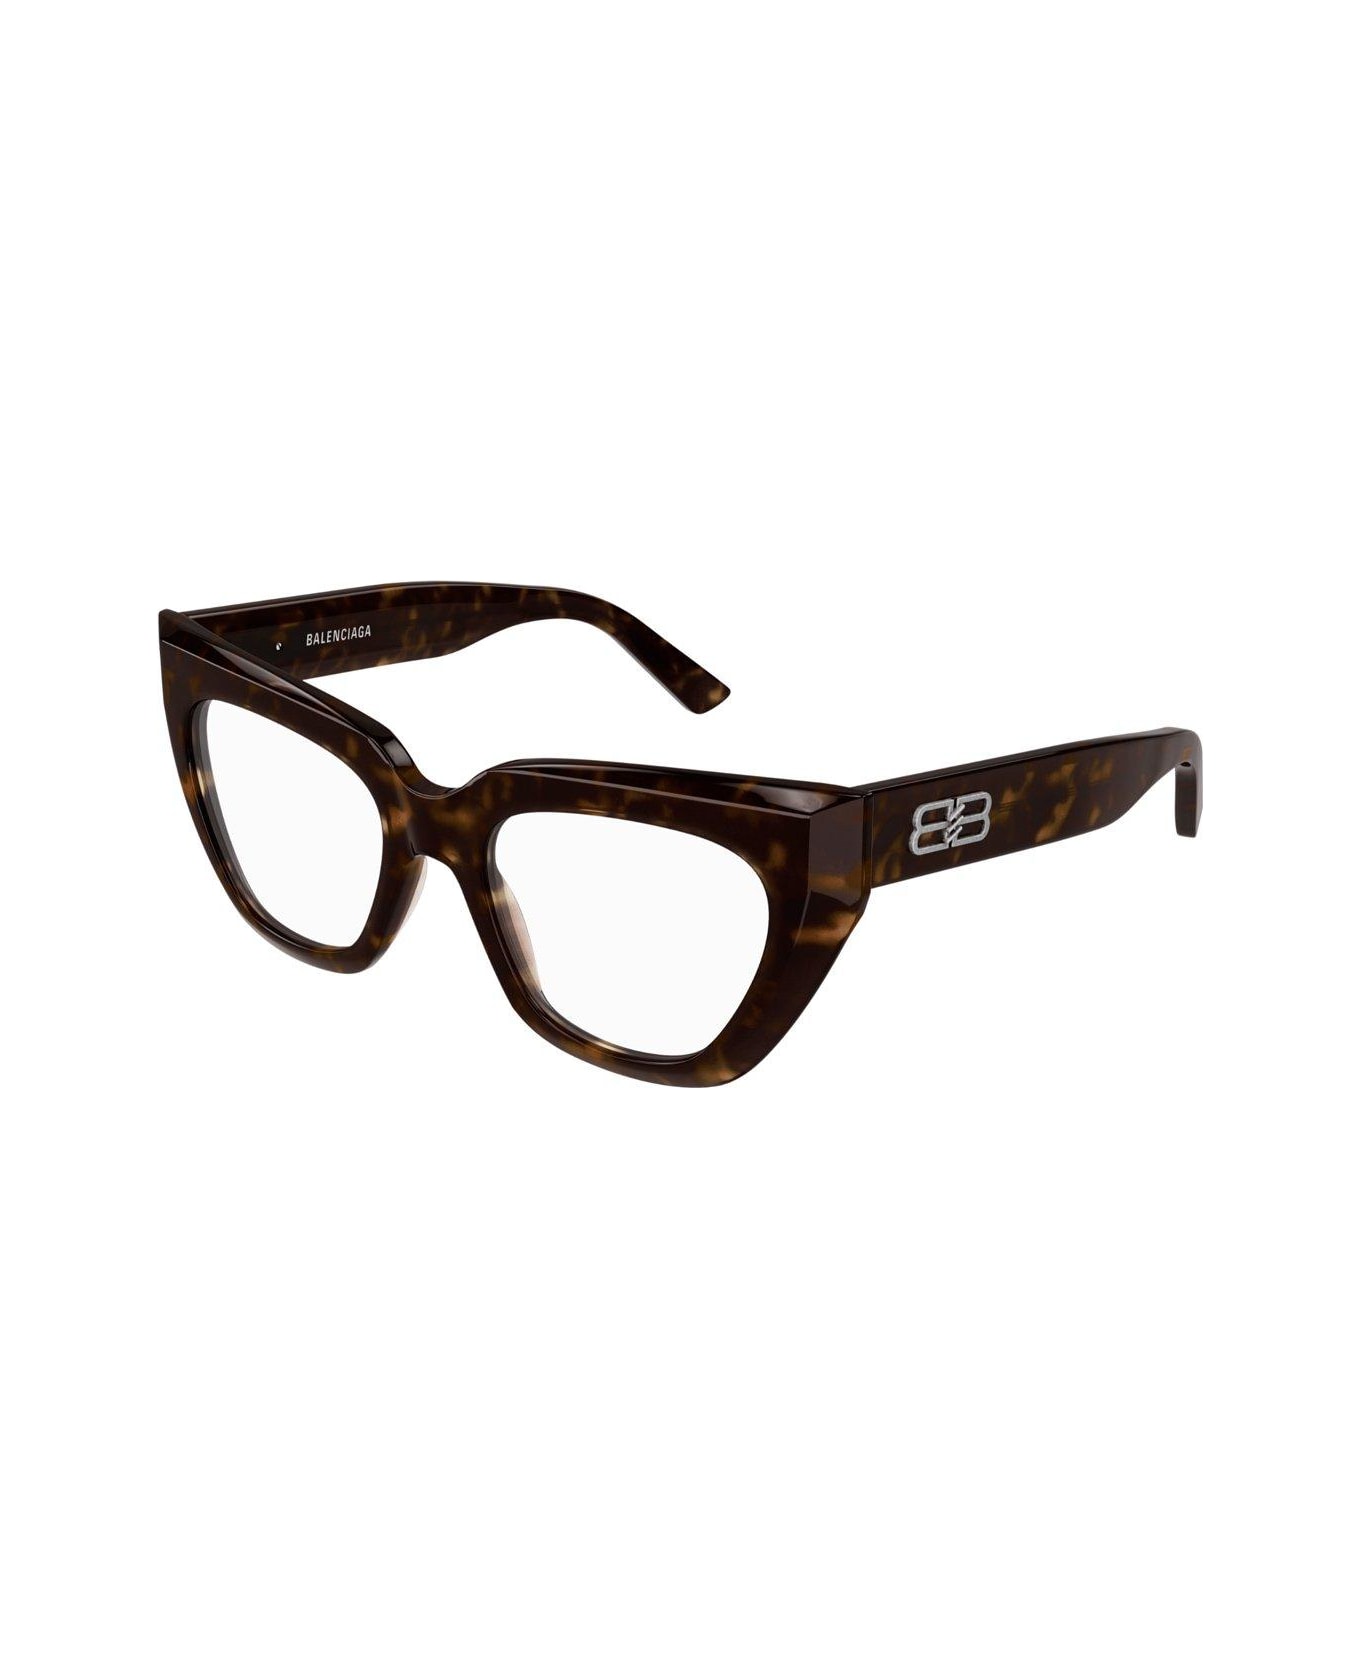 Balenciaga Eyewear Cat-eye Glasses - Marrone アイウェア